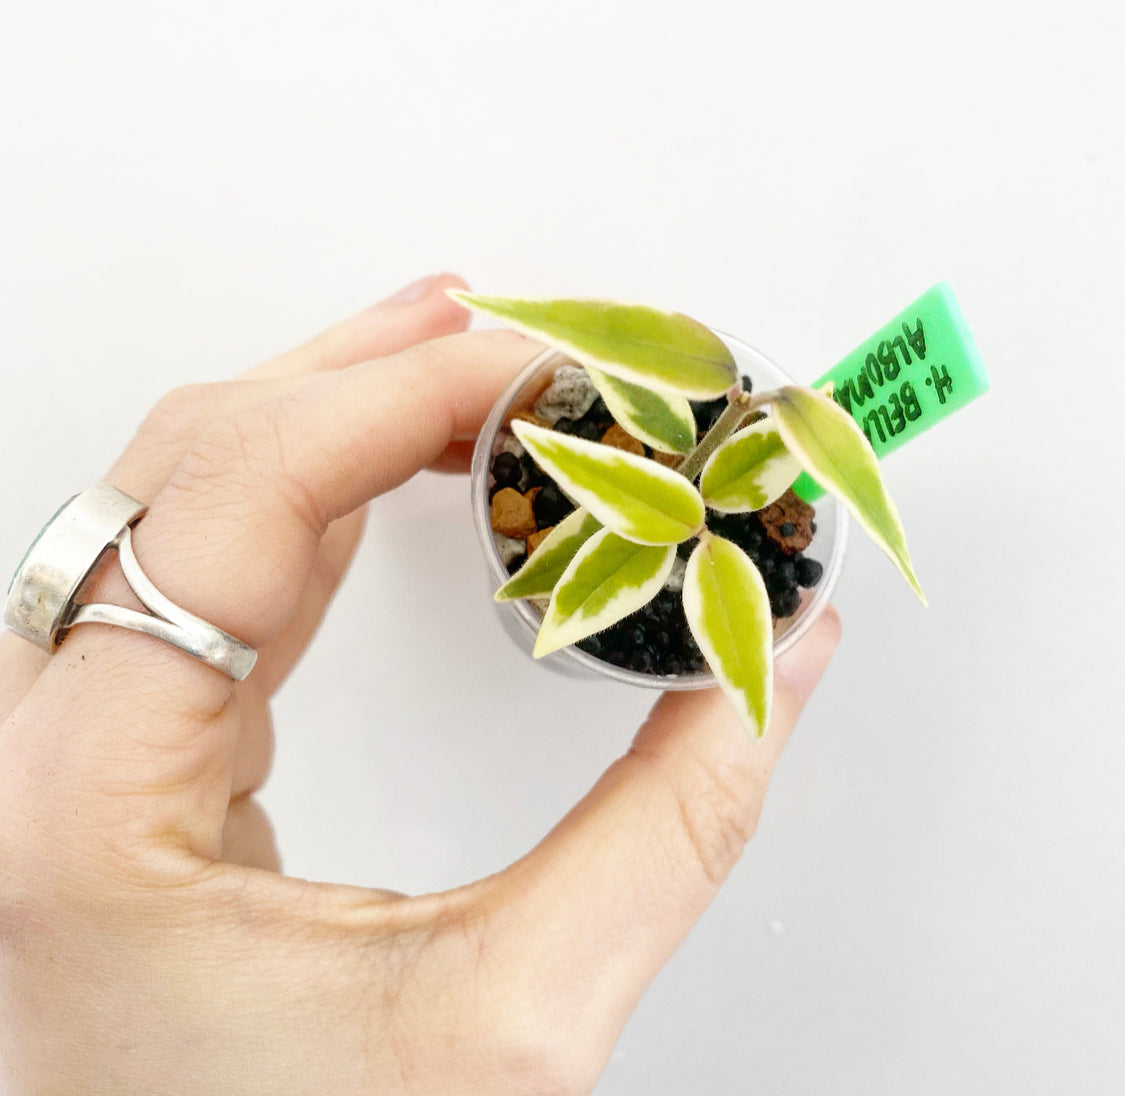 Hoya bella albomarginata